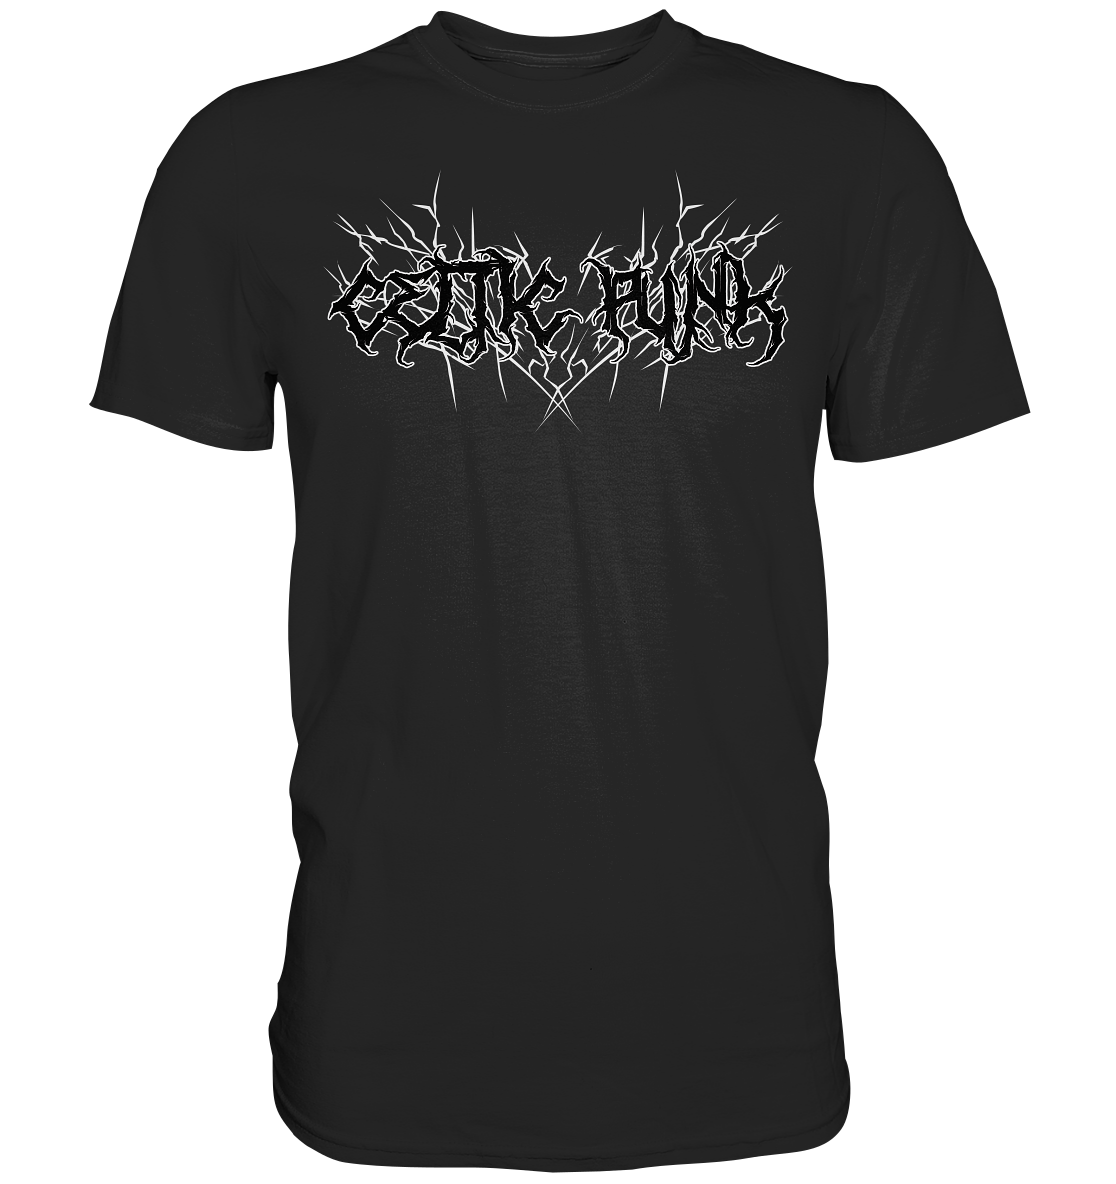 Celtic Punk "Metal Band" - Premium Shirt